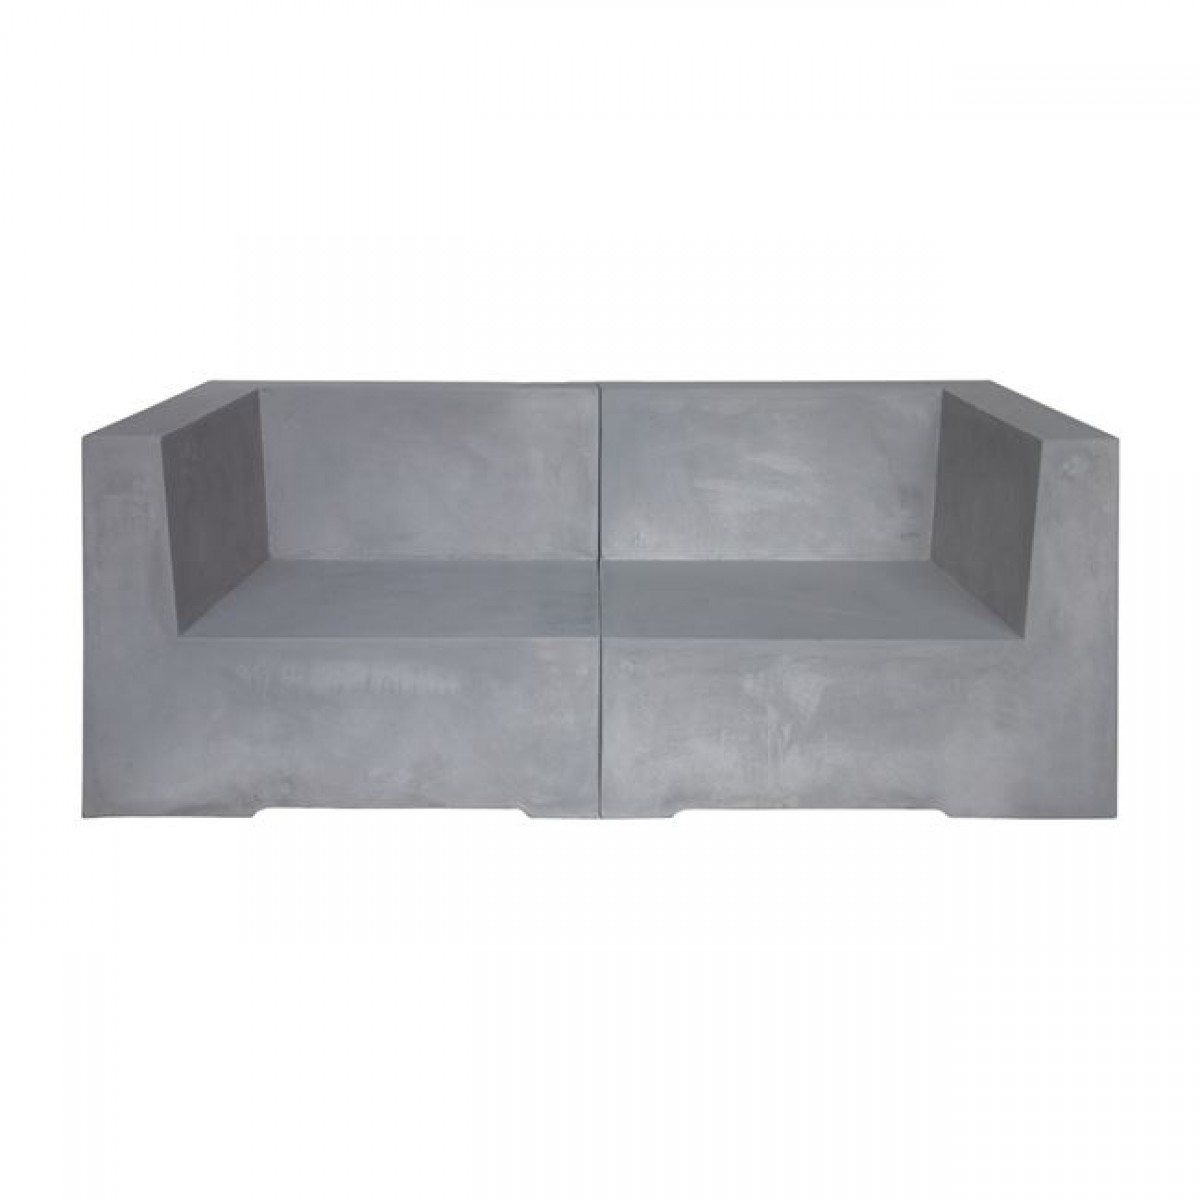 Concrete Καναπές 2-Θ Cement Grey 160X83X65Cm